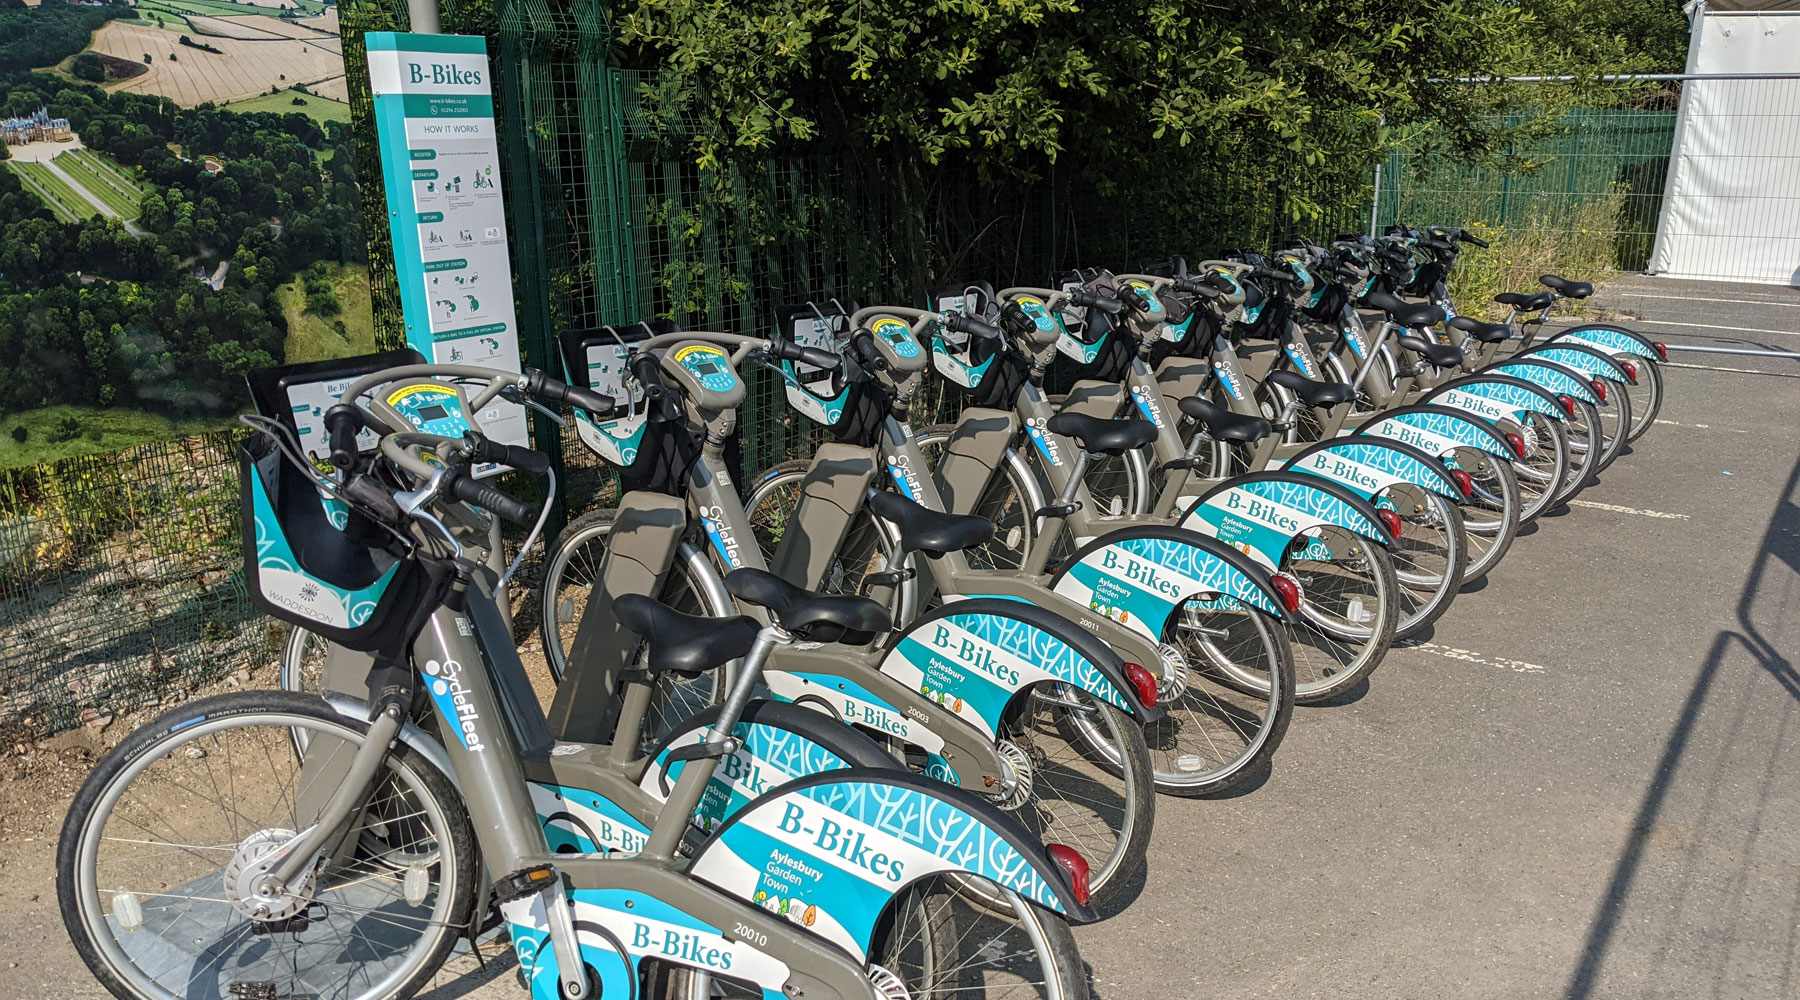 Review - the Waddesdon Greenway e-bike hire scheme